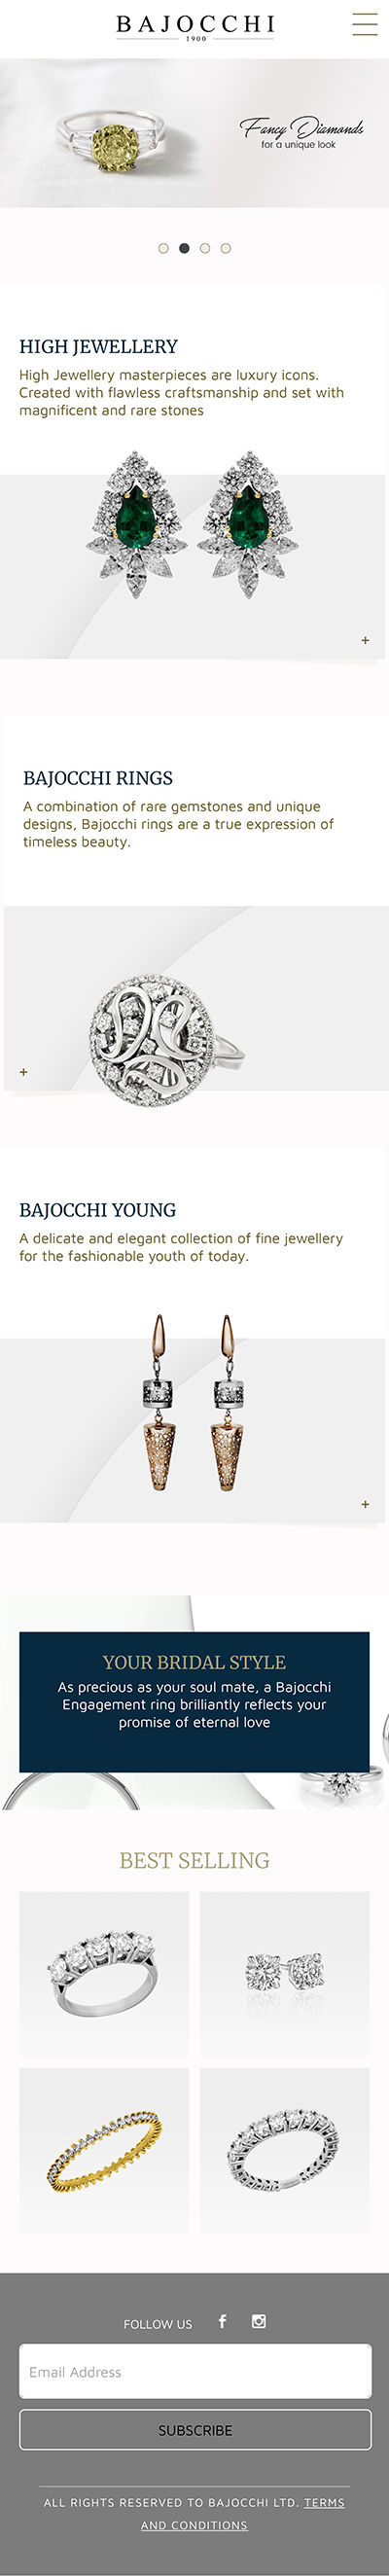 Bajocchi jewellers